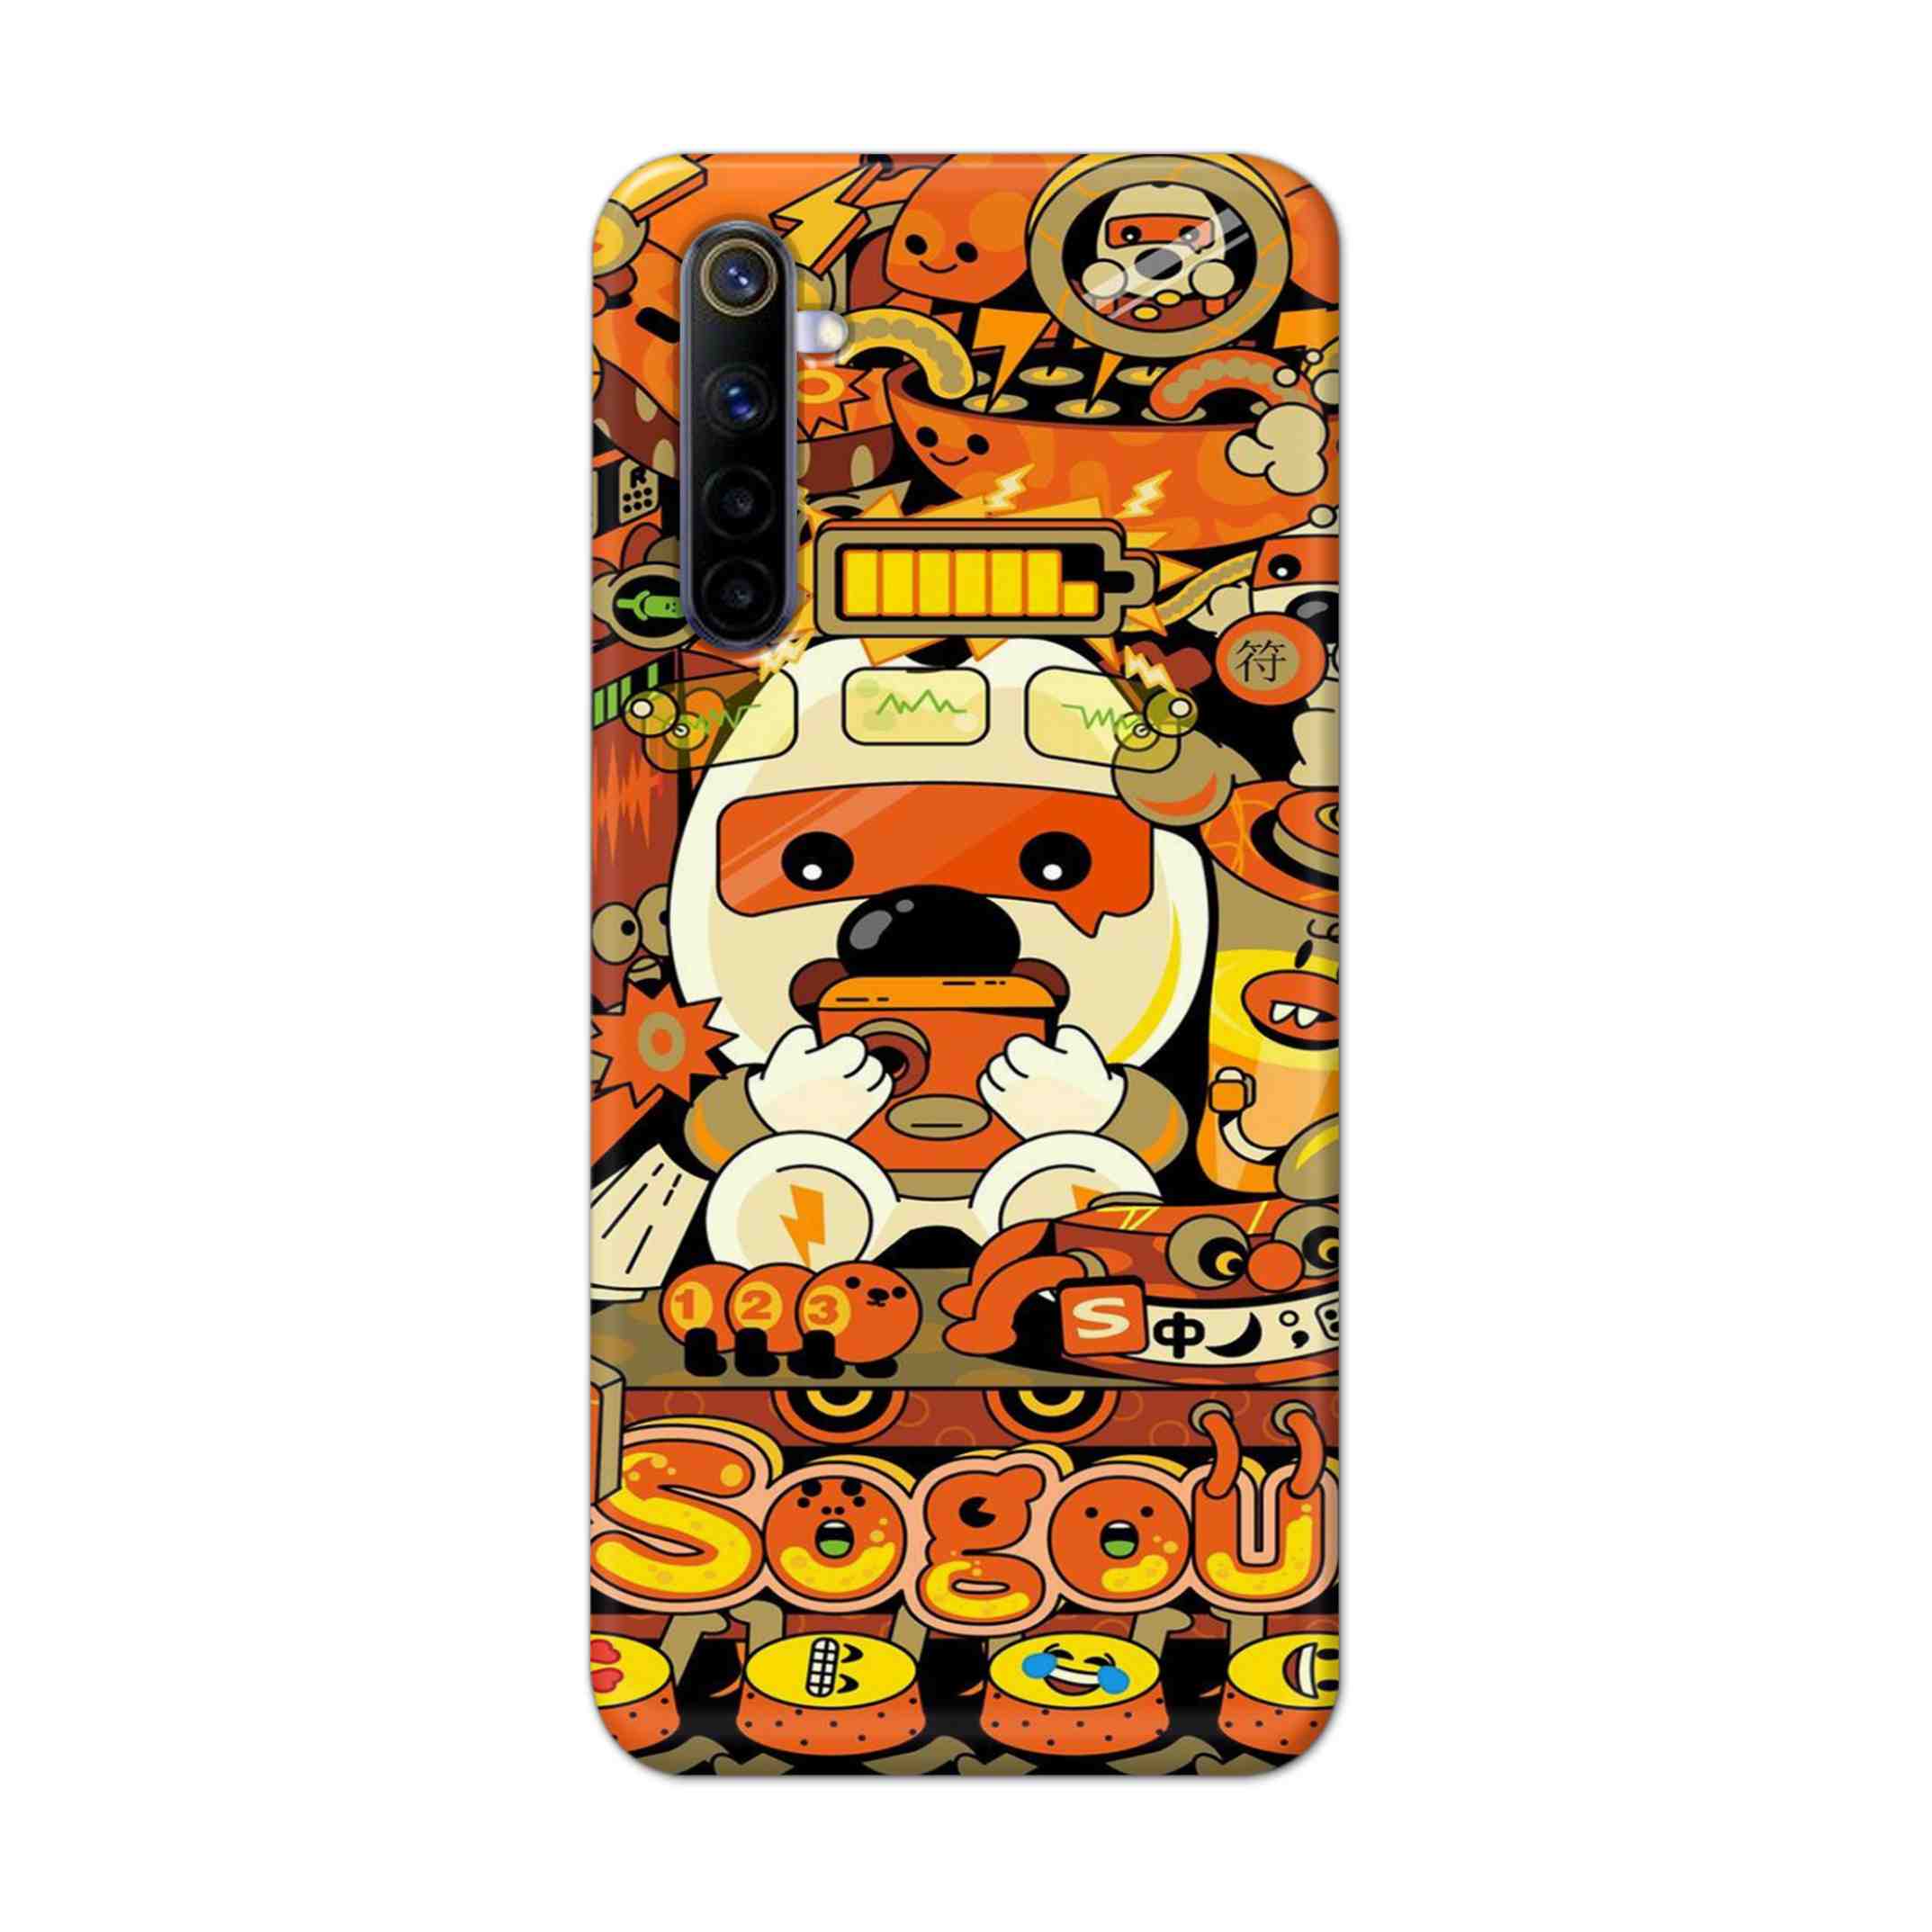 Buy Sogou Hard Back Mobile Phone Case Cover For REALME 6 PRO Online